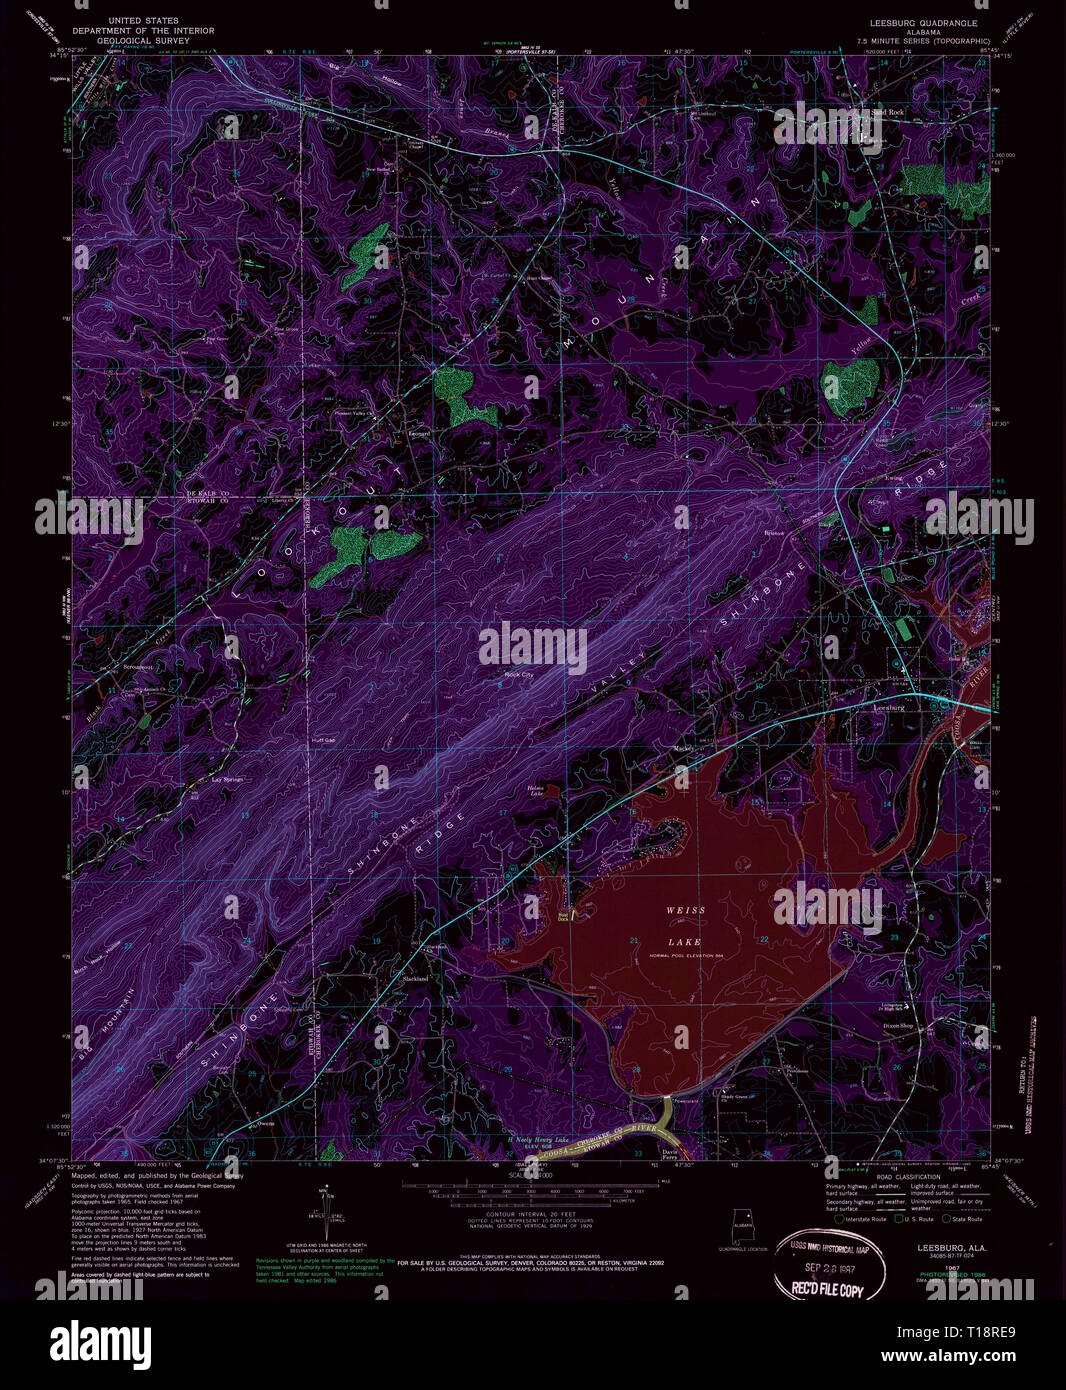 USGS TOPO Map Alabama AL Leesburg 304395 1967 24000 Inverted Stock Photo